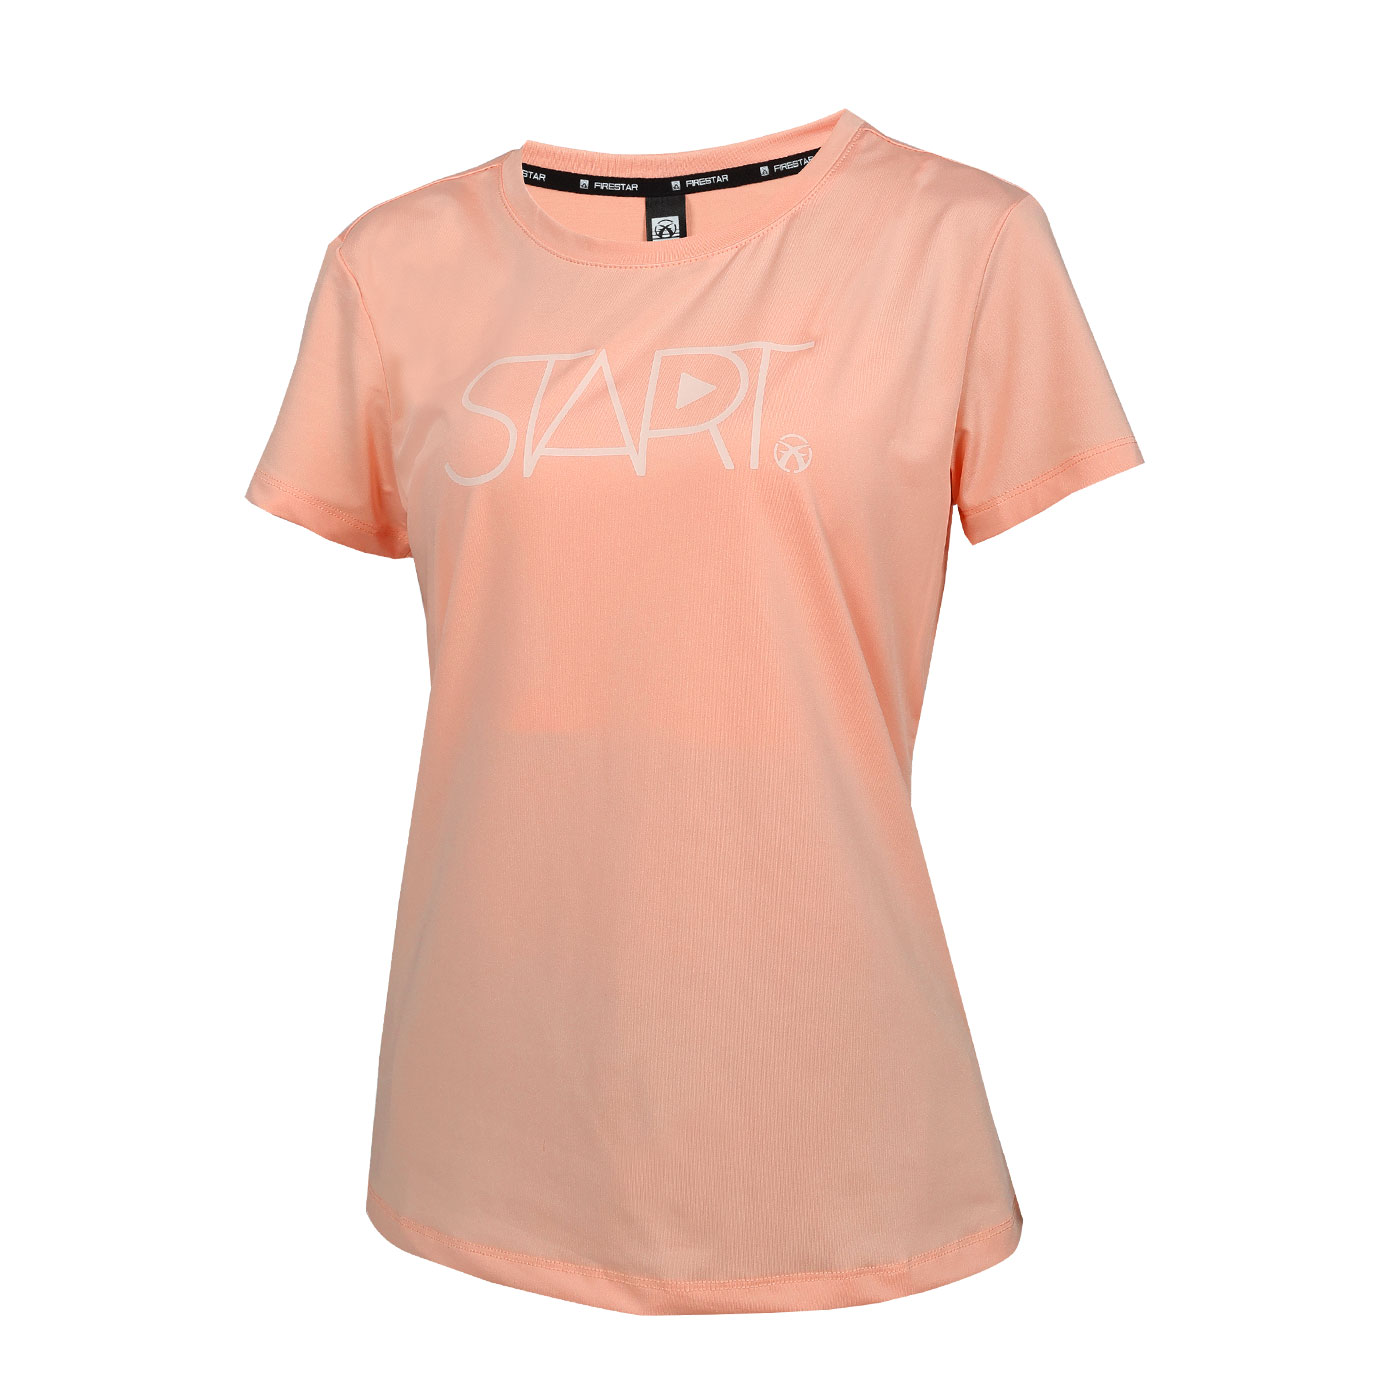 FIRESTAR 女彈性印花短袖T恤  DL465-43 - 淺橘白